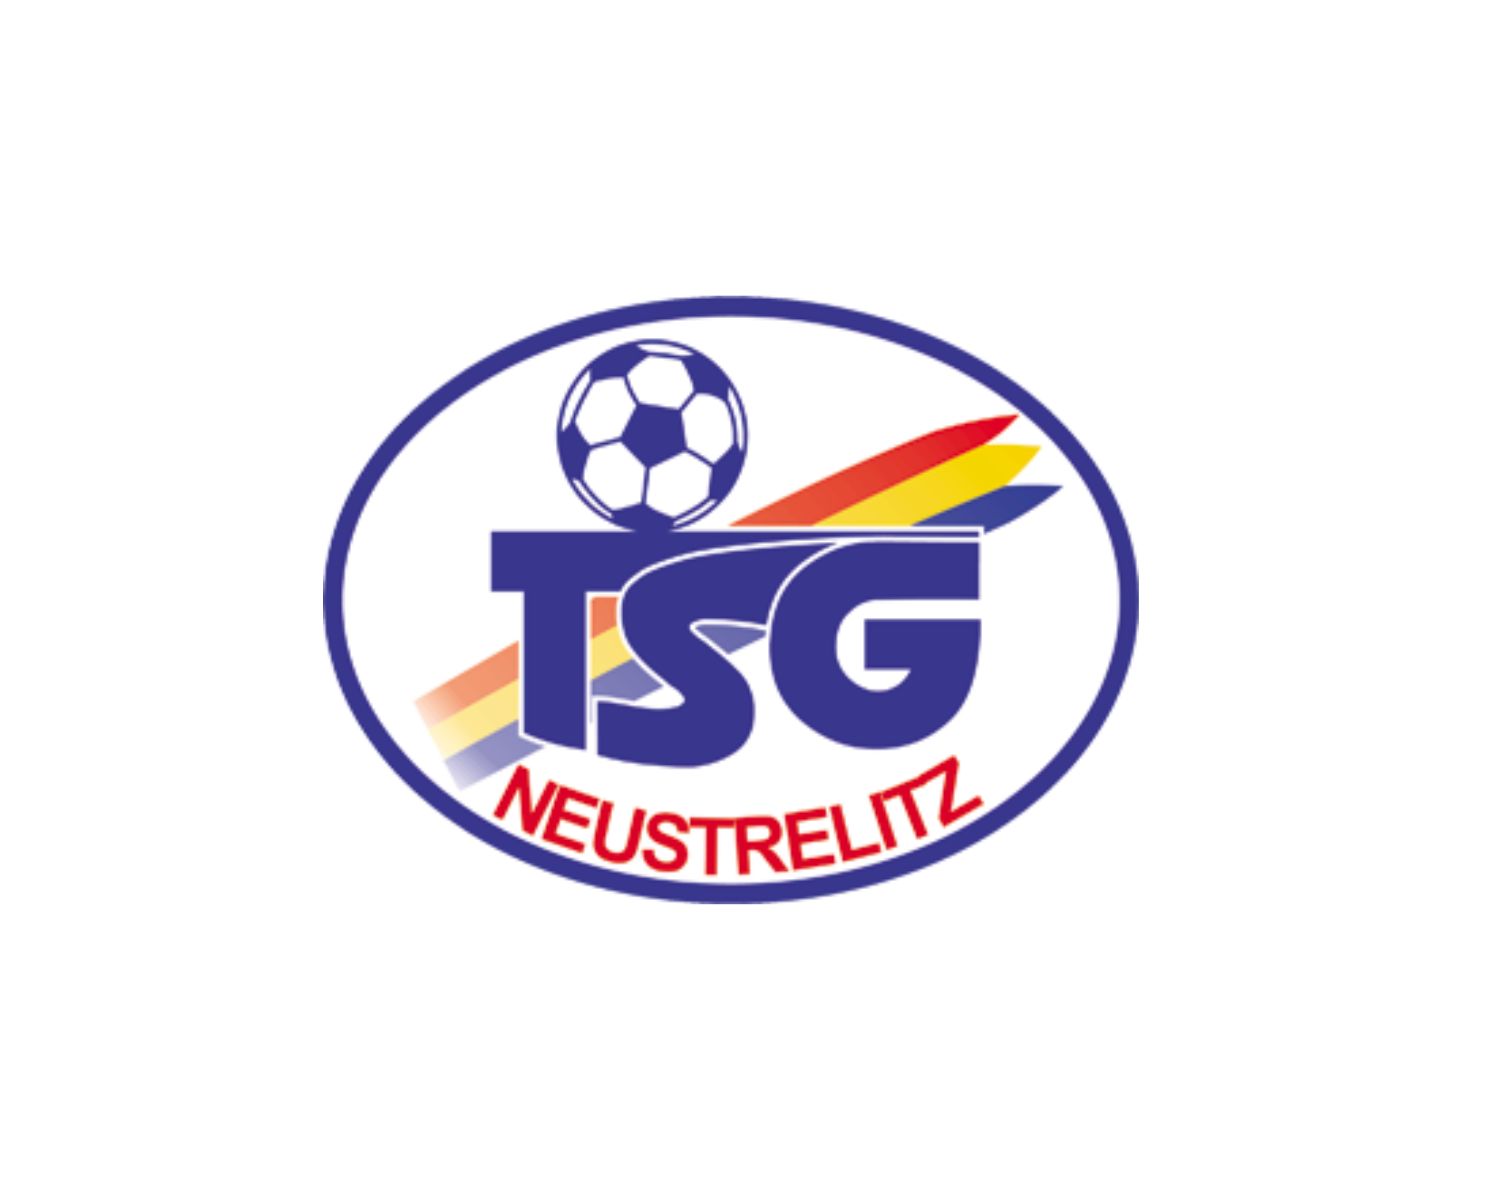 tsg-neustrelitz-17-football-club-facts